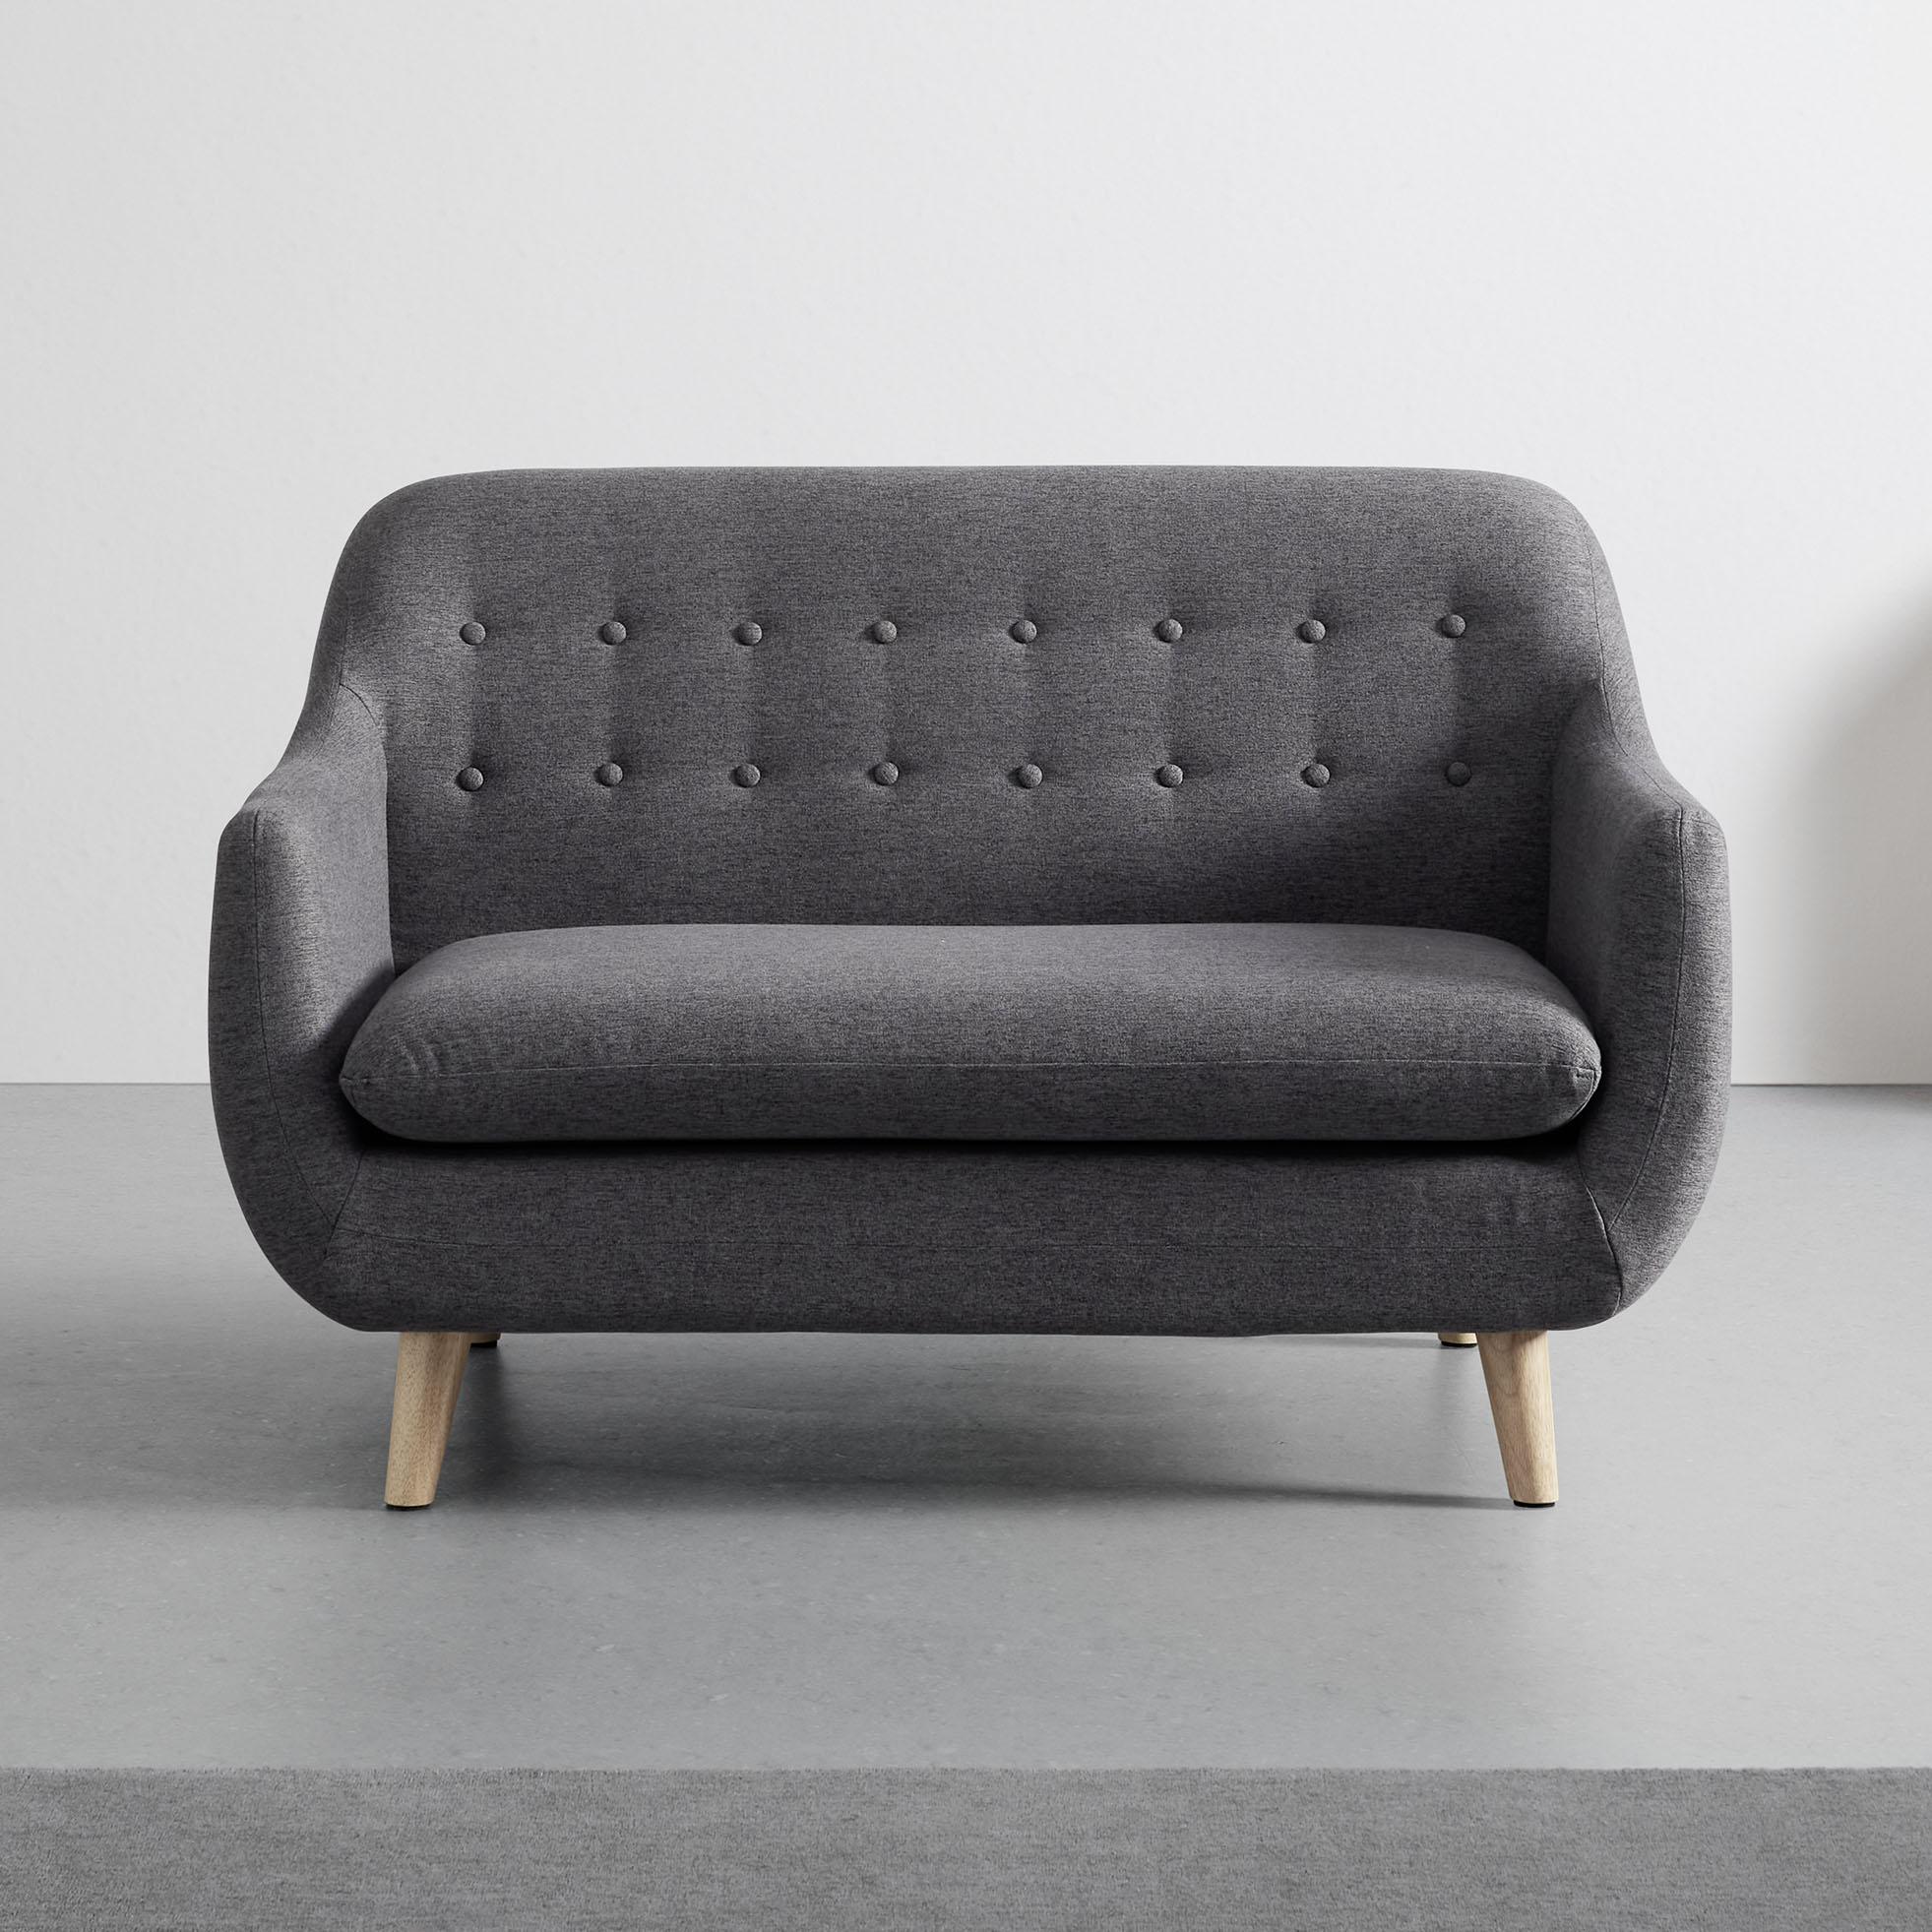 Sofa grau, "Dilly" - Grau, MODERN, Holz/Textil (130/85/78cm) - Bessagi Home